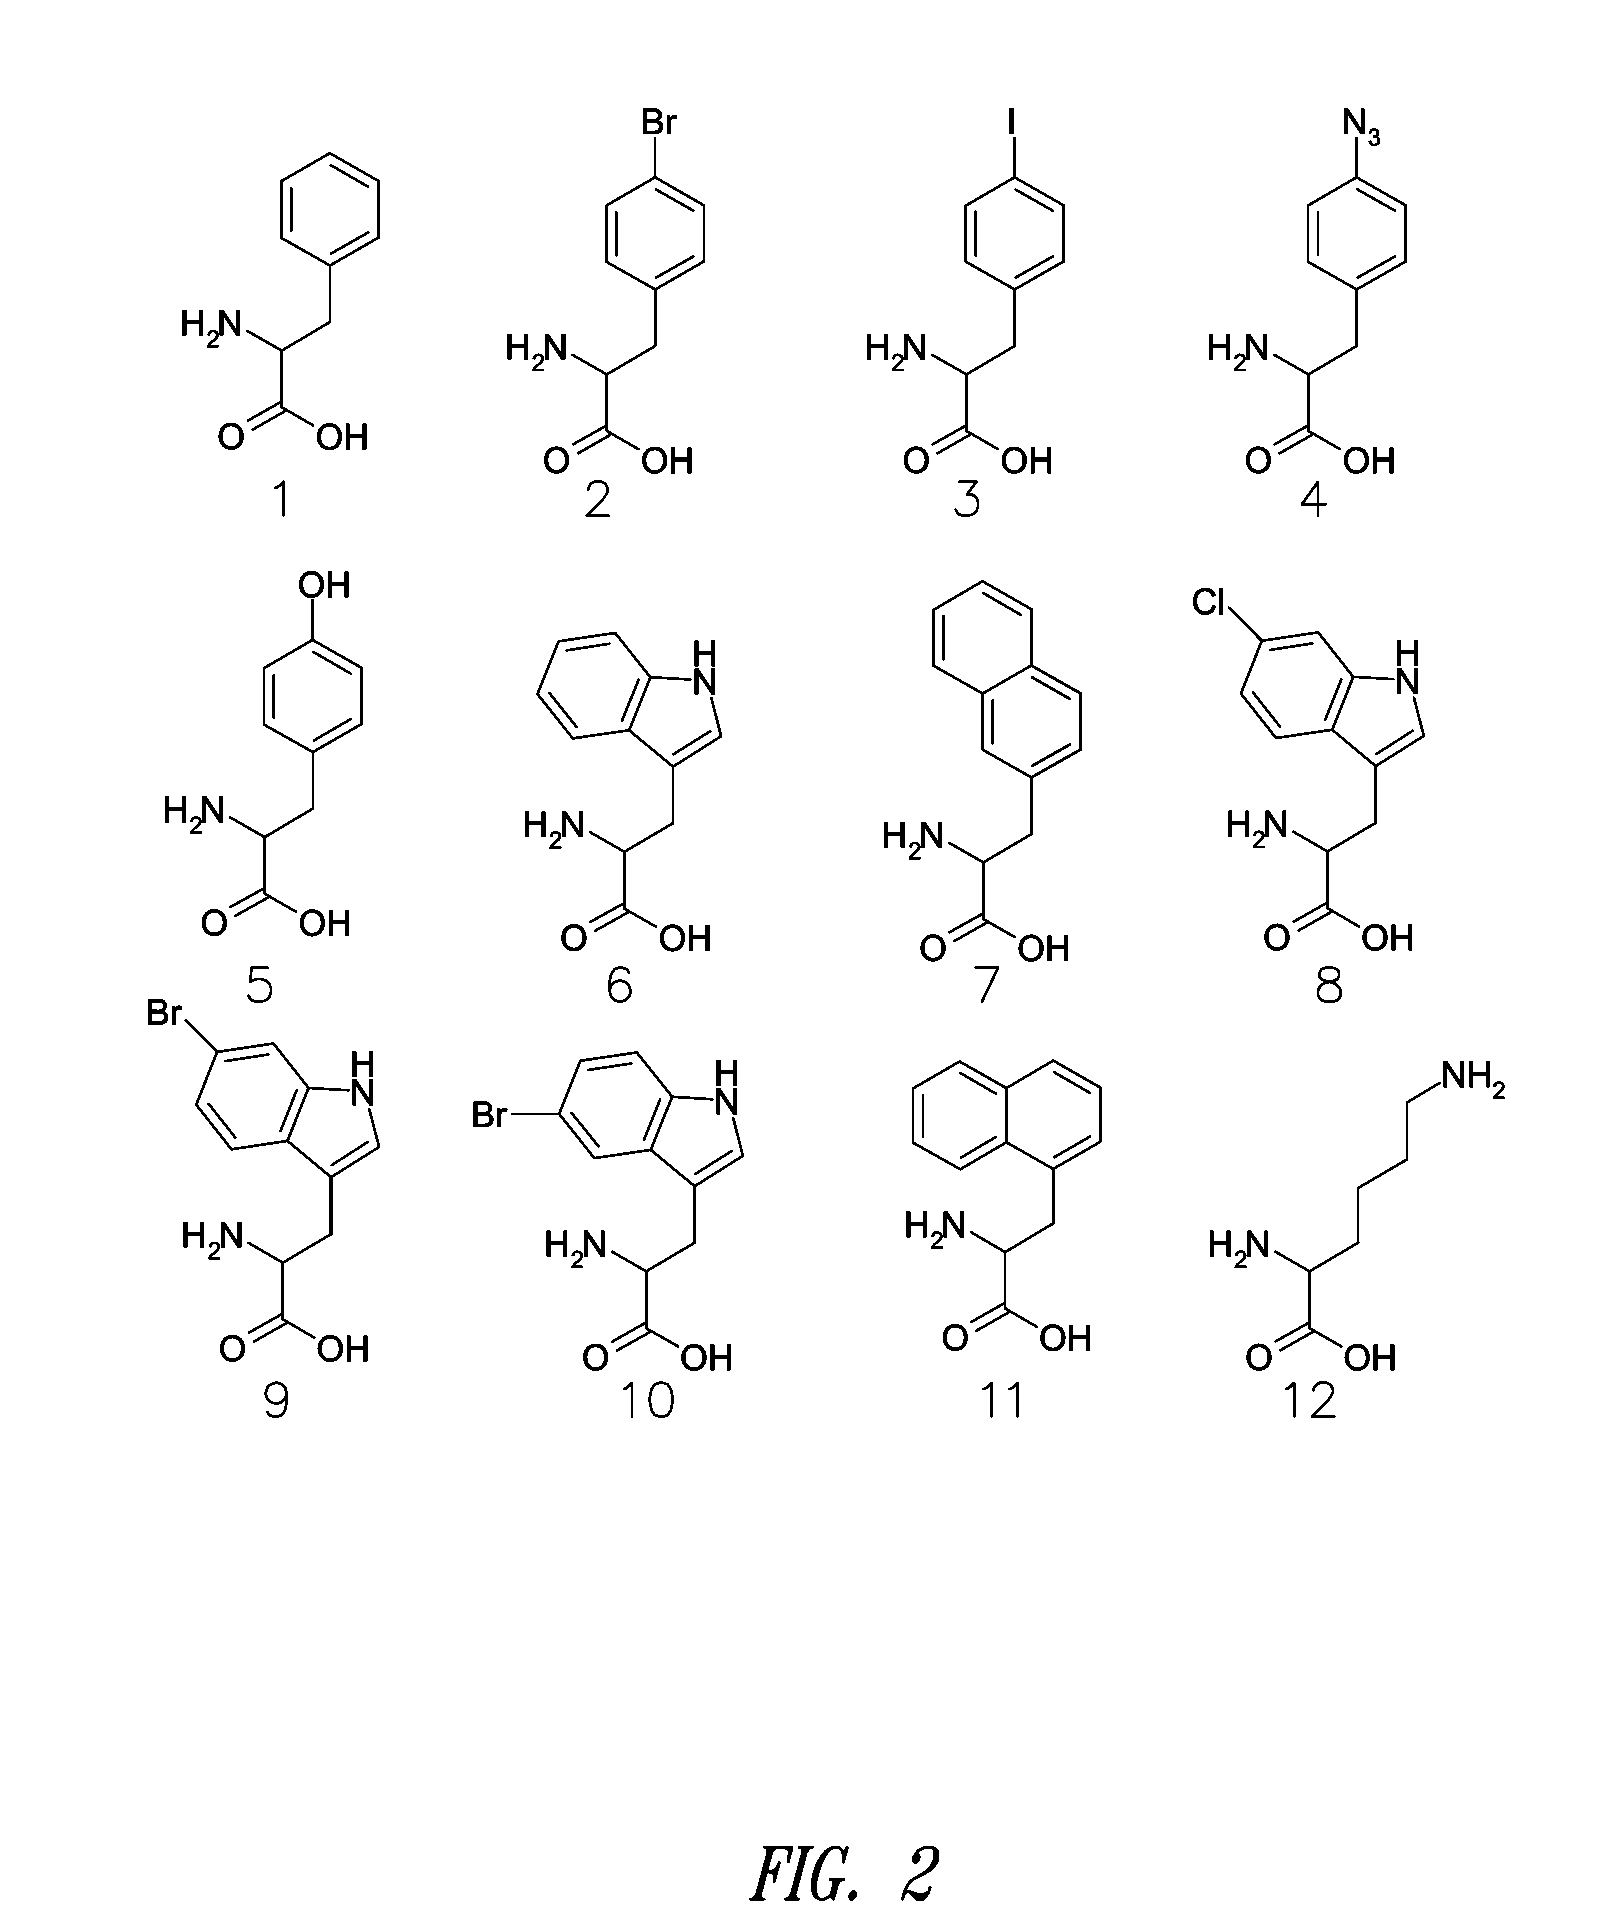 Site-specific incorporation of amino acids into molecules